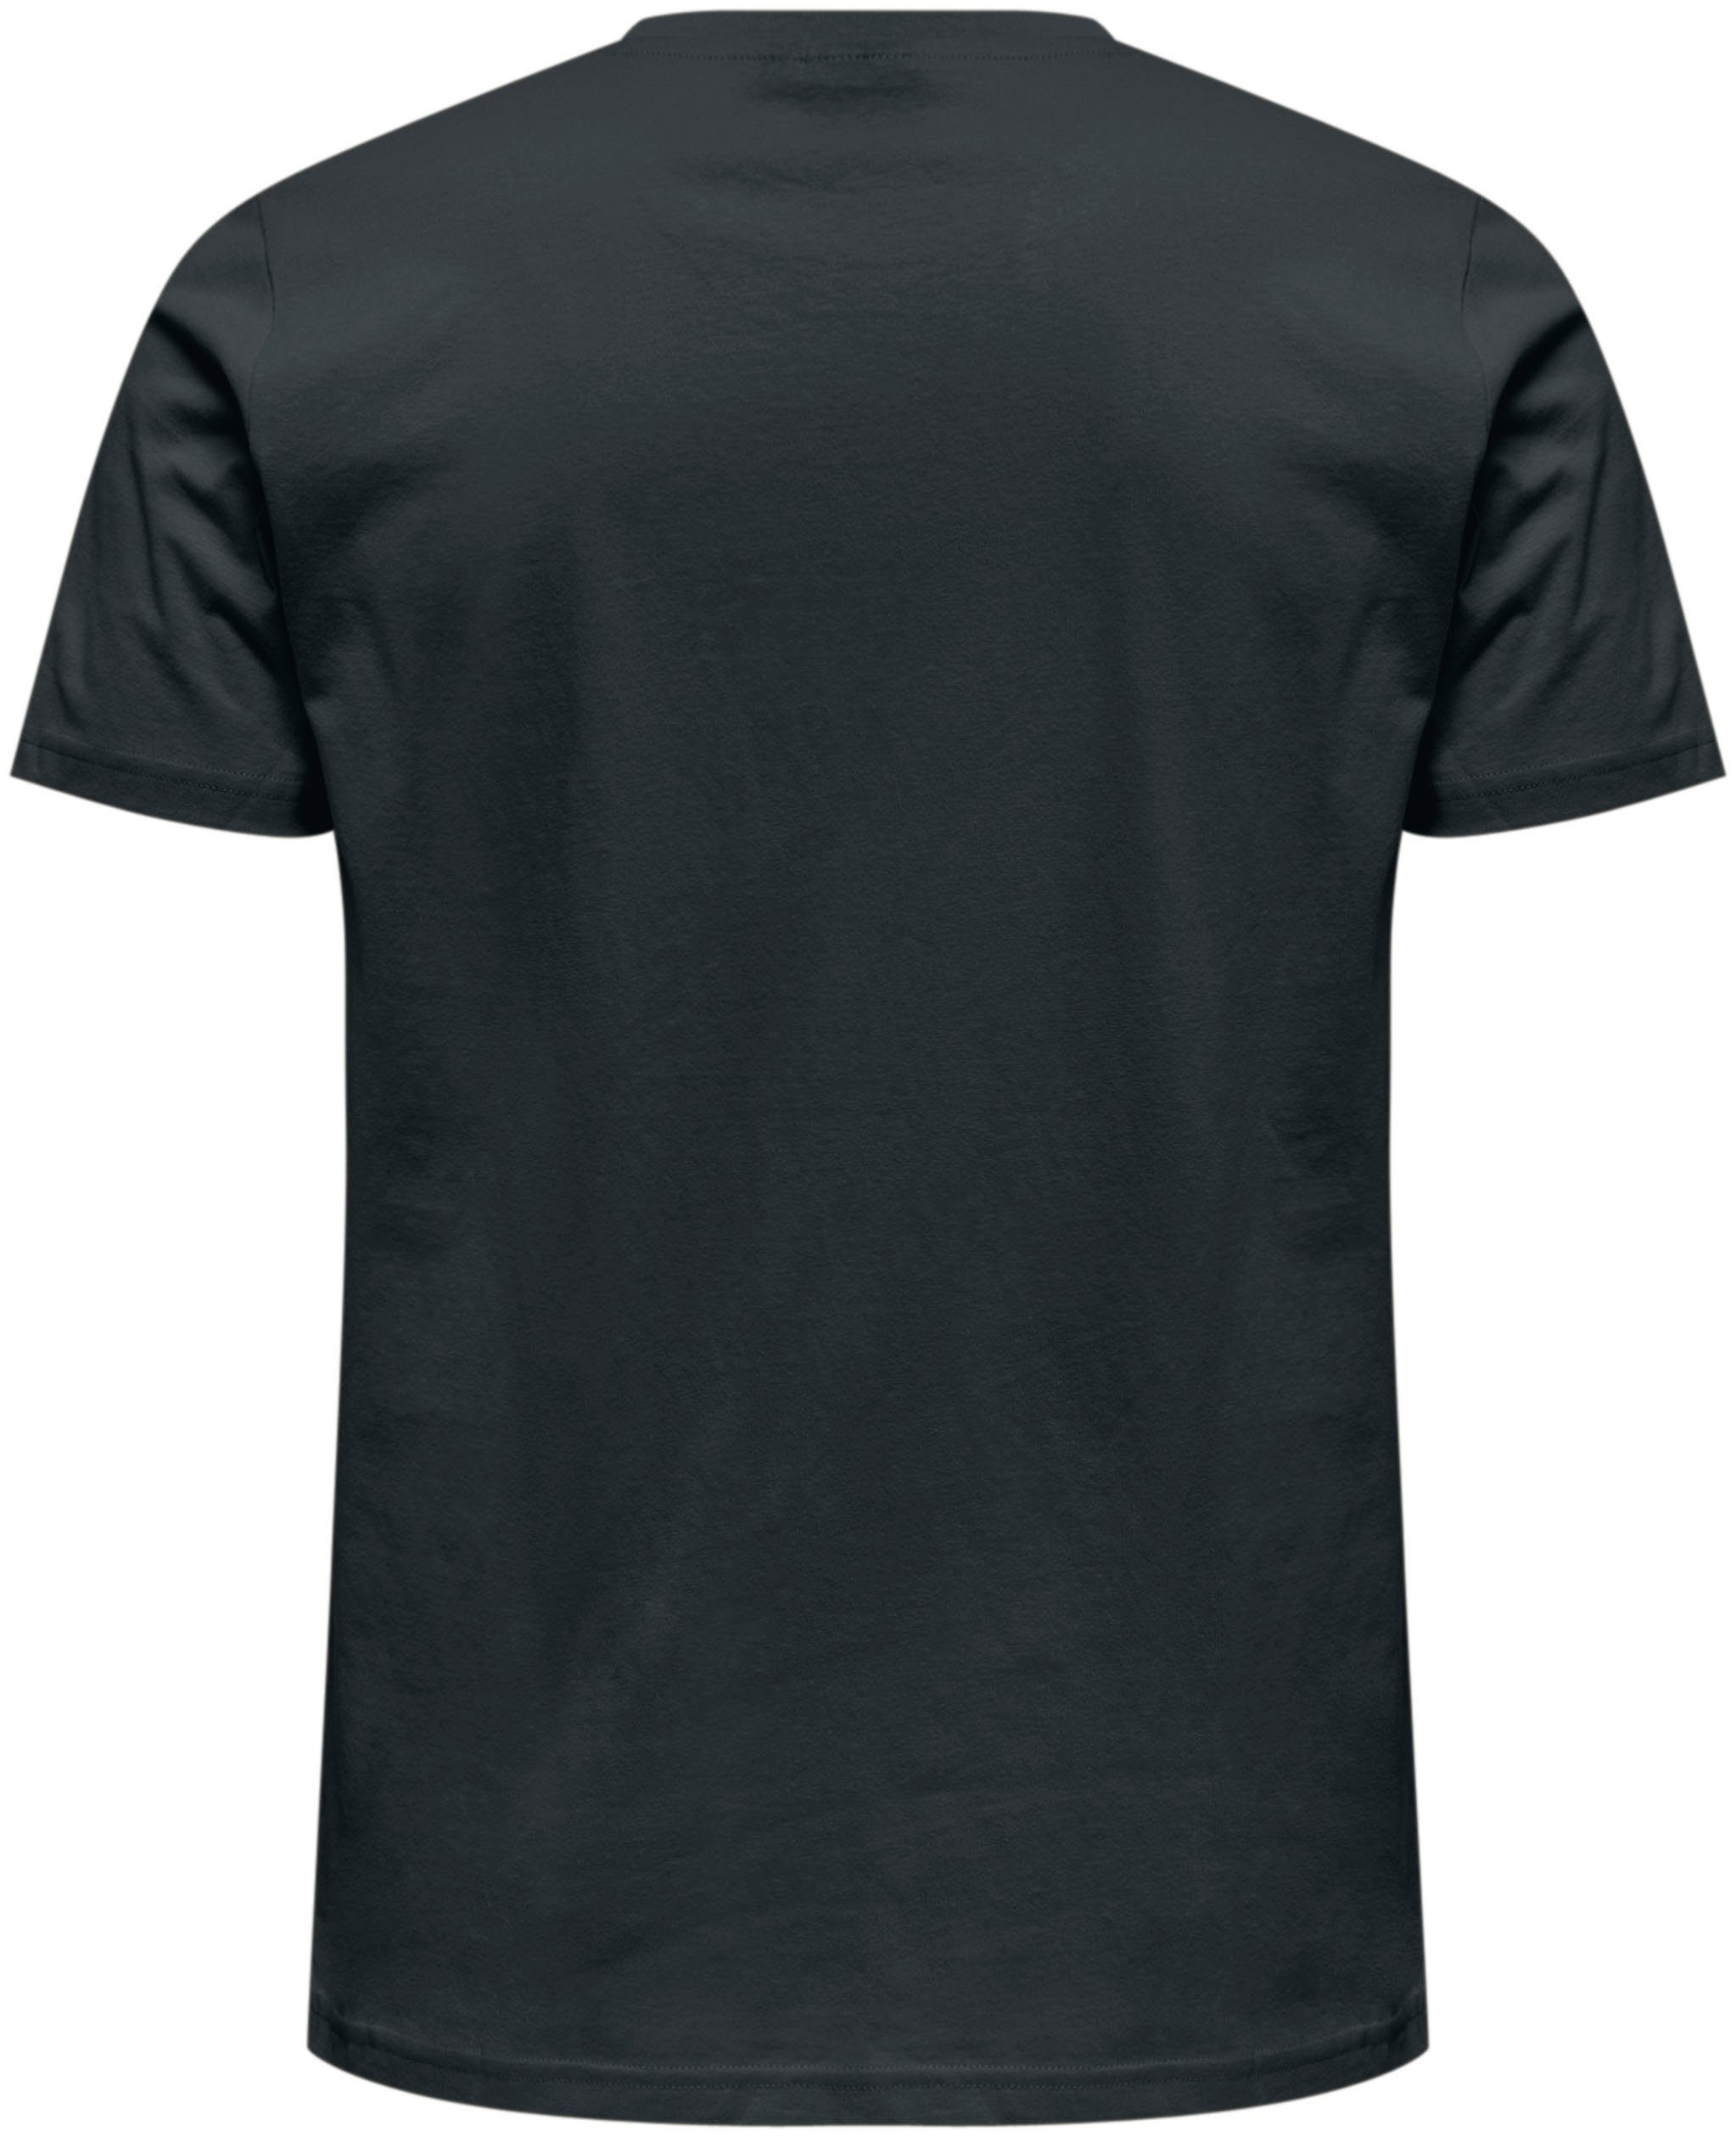 hummel Logo T-Shirt schwarz mit Print